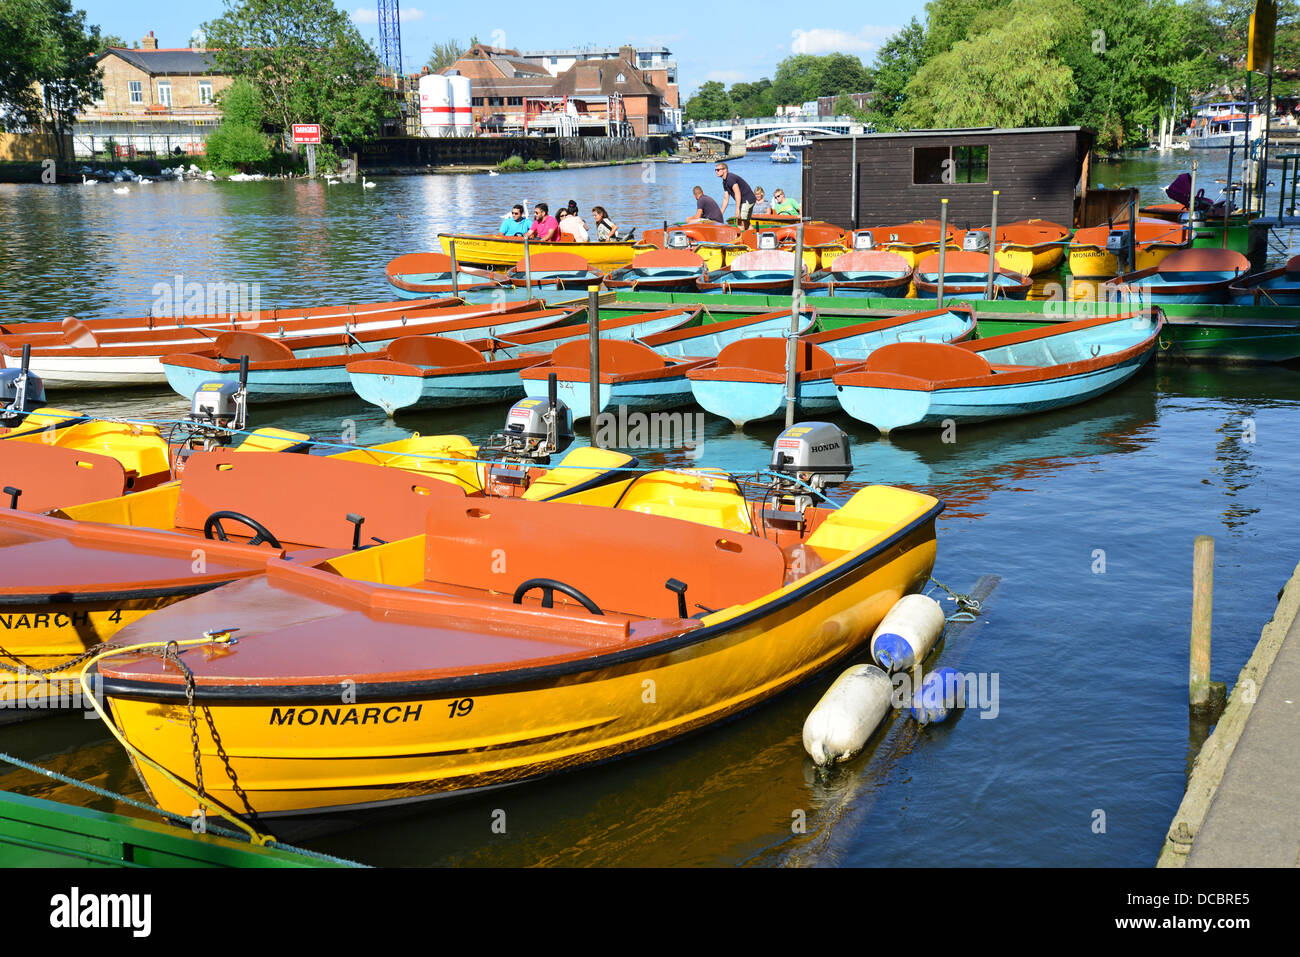 Hire-boat rides on River Thames, Windsor, Berkshire, England, United Kingdom Stock Photo